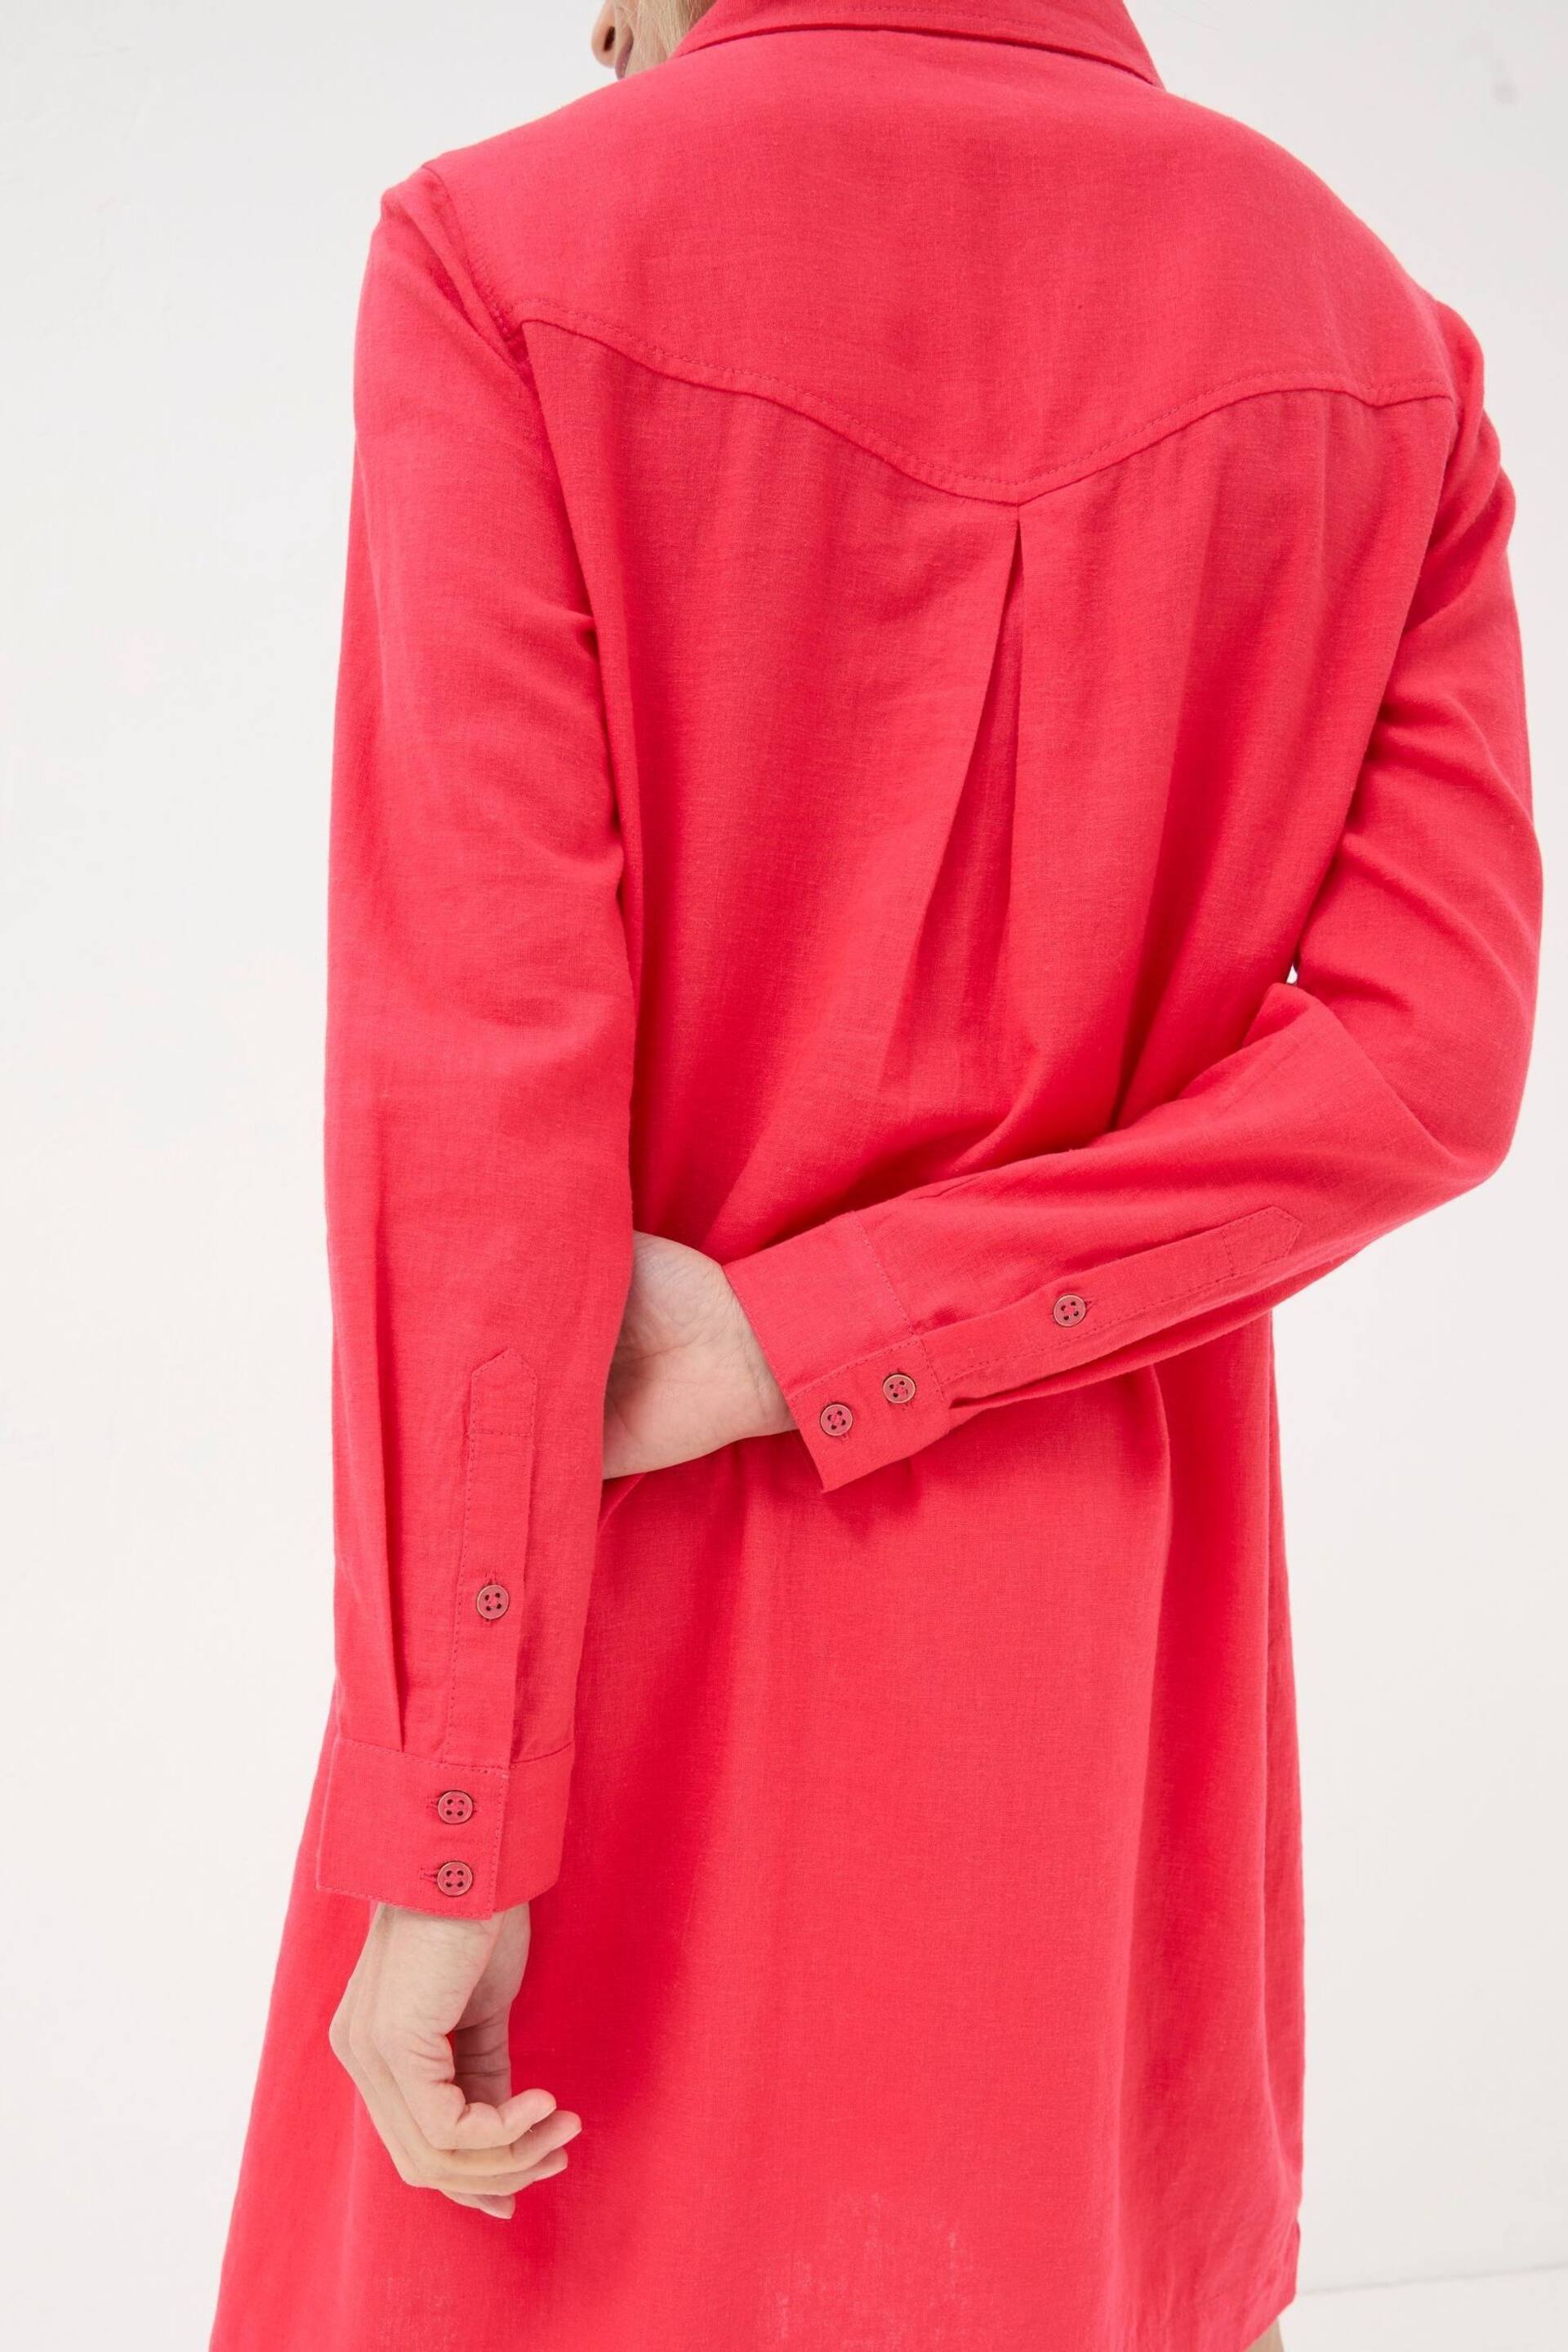 FatFace Red Linen Blend Tunic Dress - Image 3 of 4